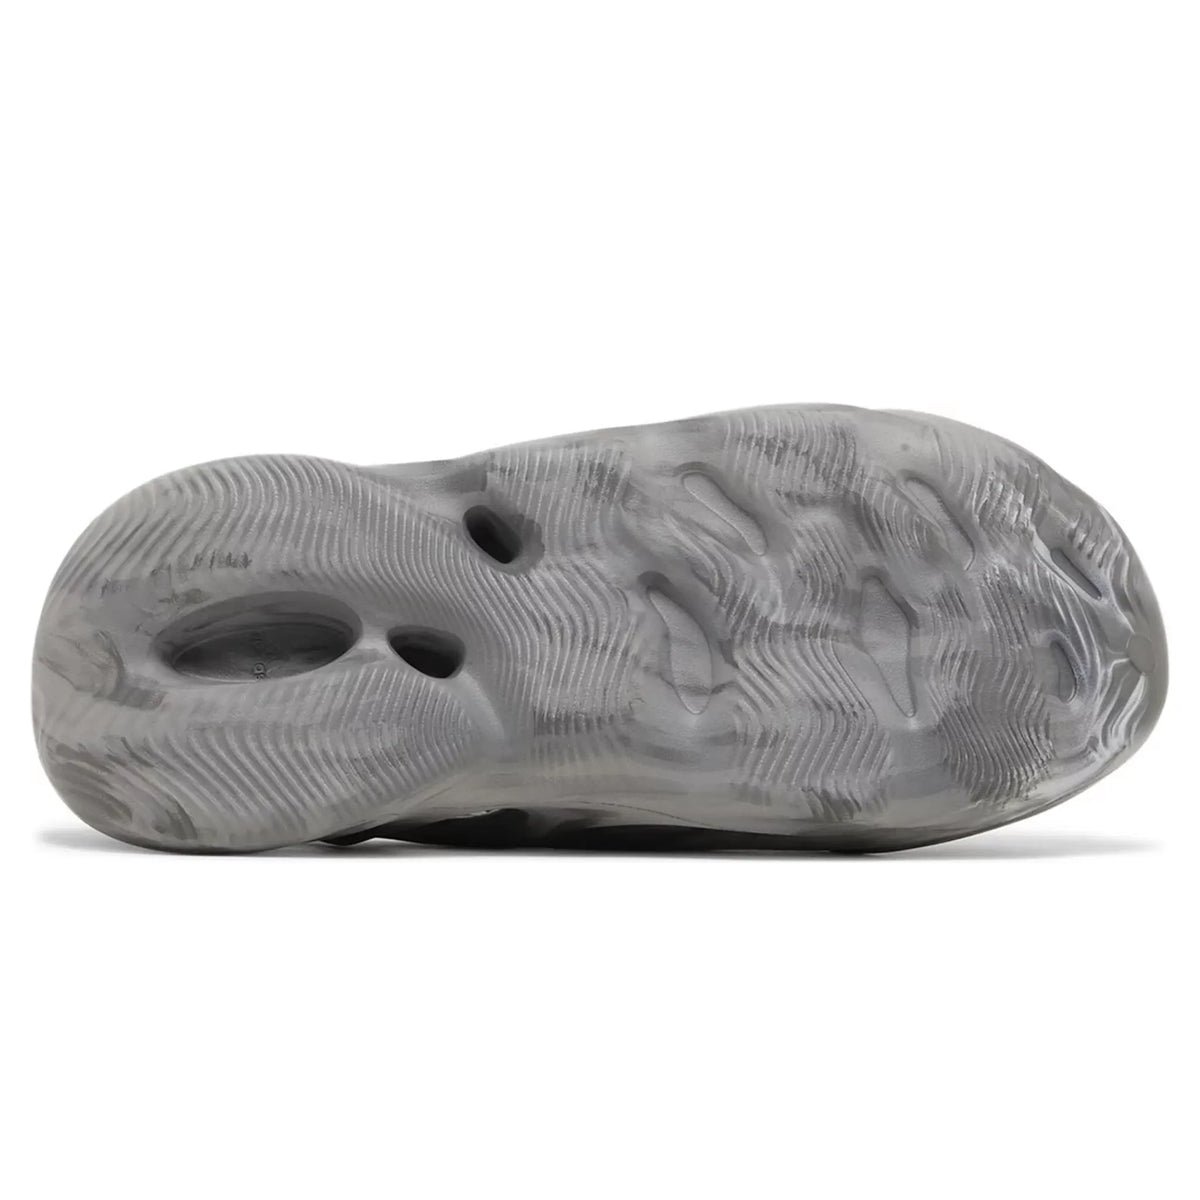 Adidas Yeezy Foam RNNR MX Granite UK 4 / Grey